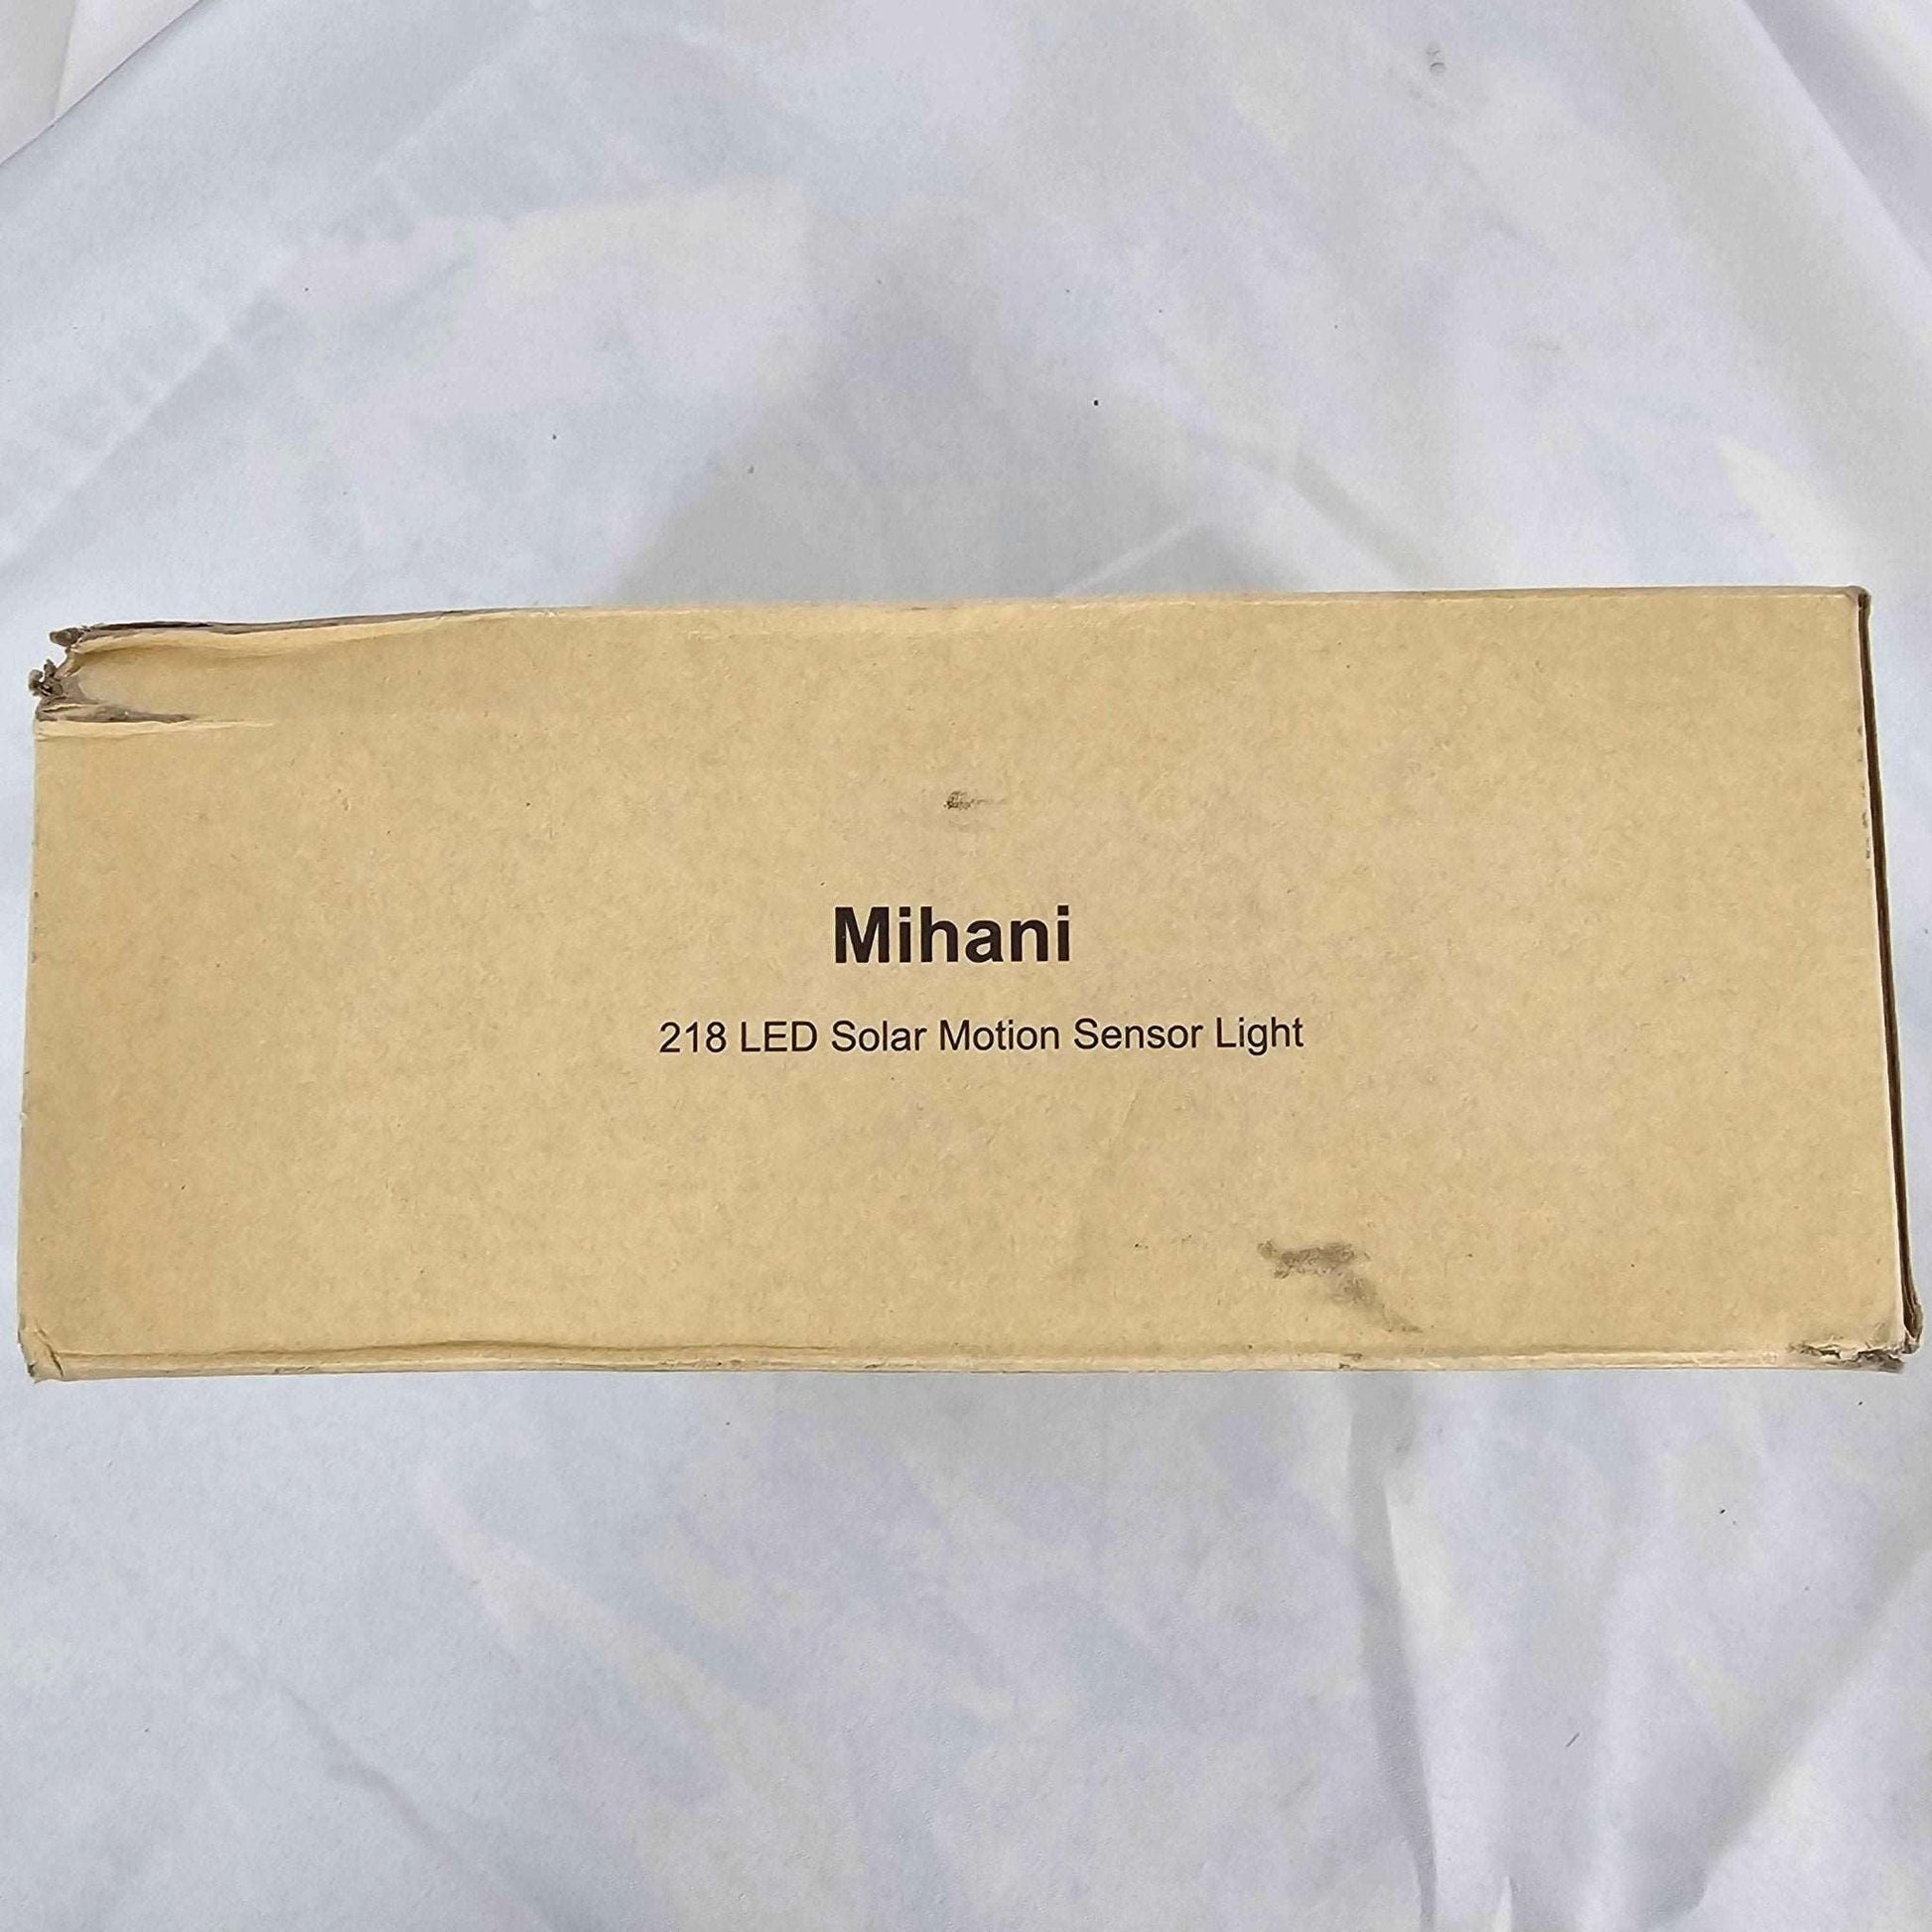 218 LED Solar Motion Sensor Light Mihani MHN-02 - DQ Distribution